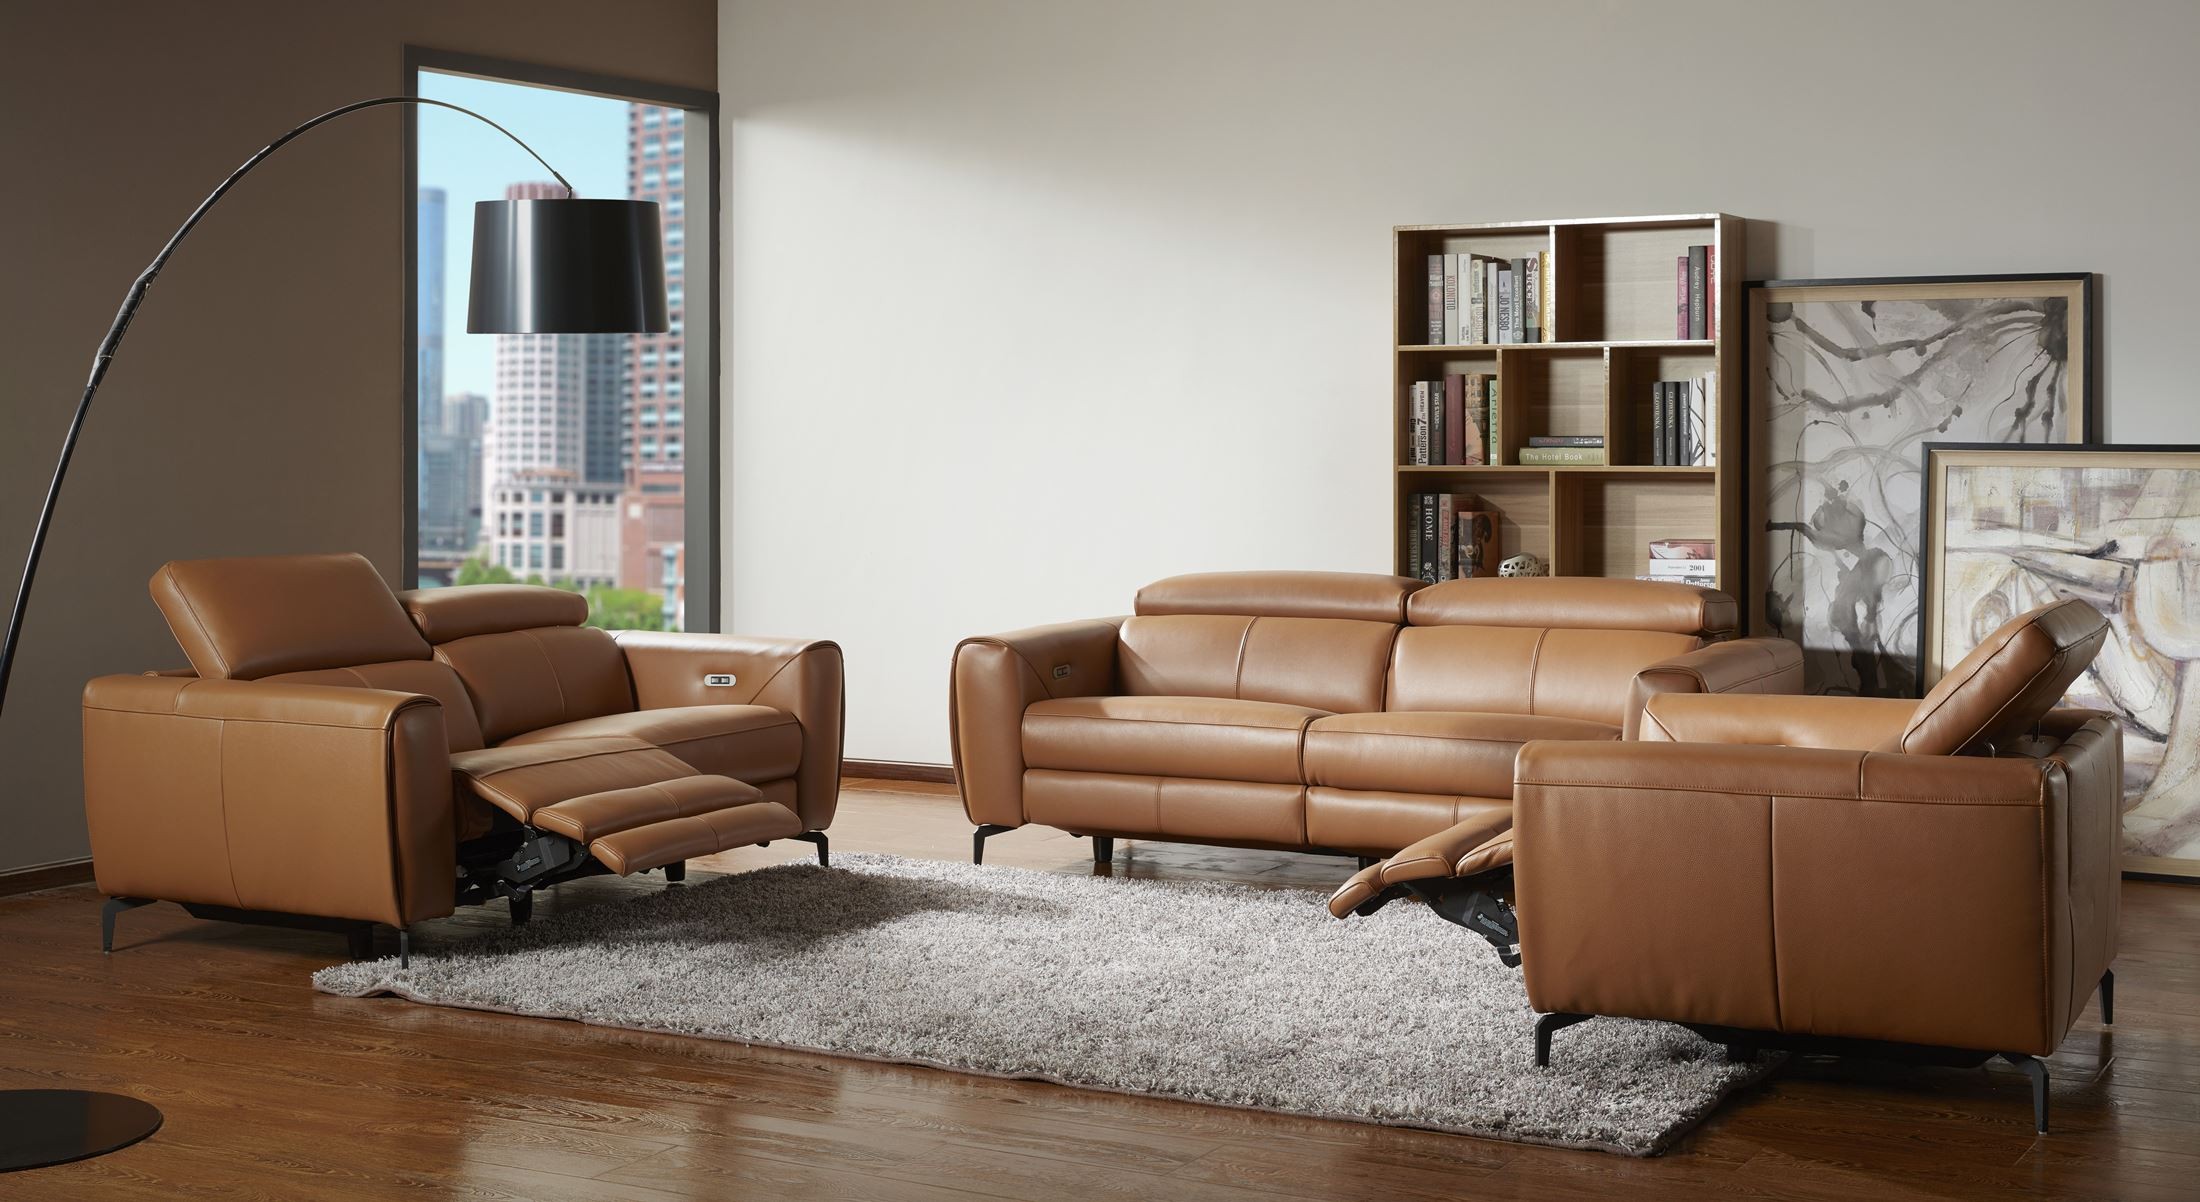 Lorenzo Caramel Leather Living Room Set, Living Room Set Leather